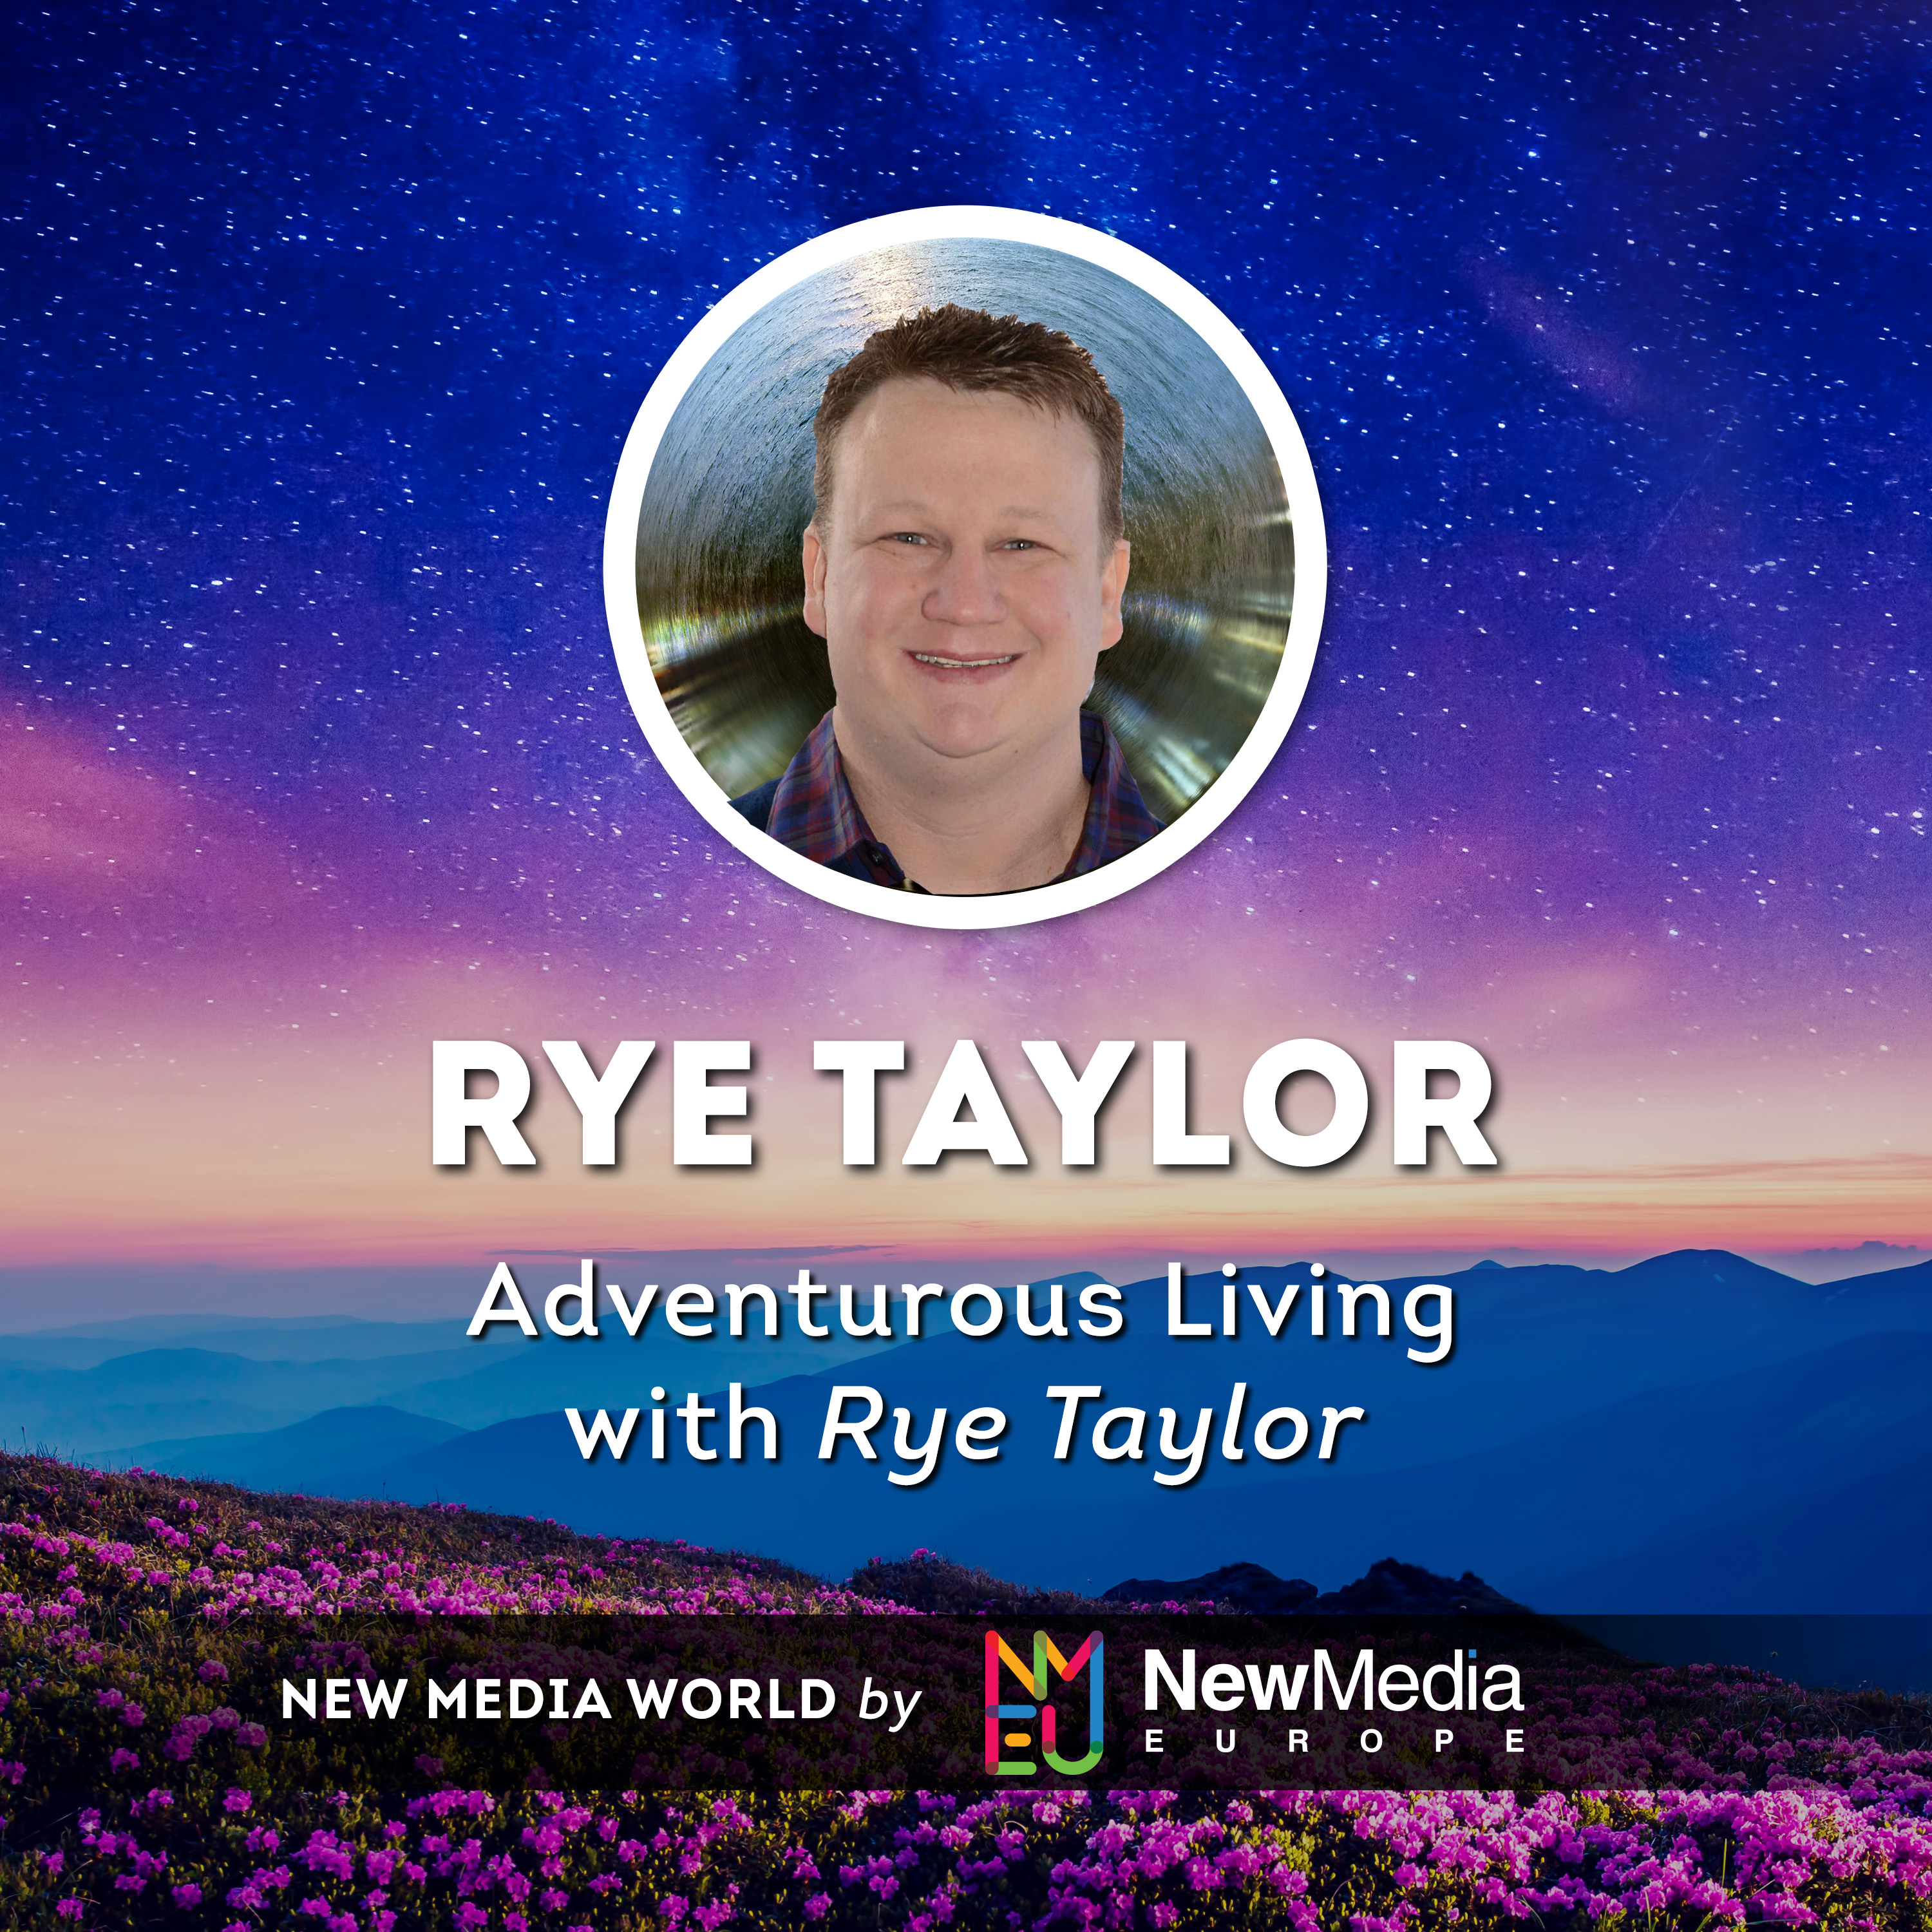 Rye Taylor